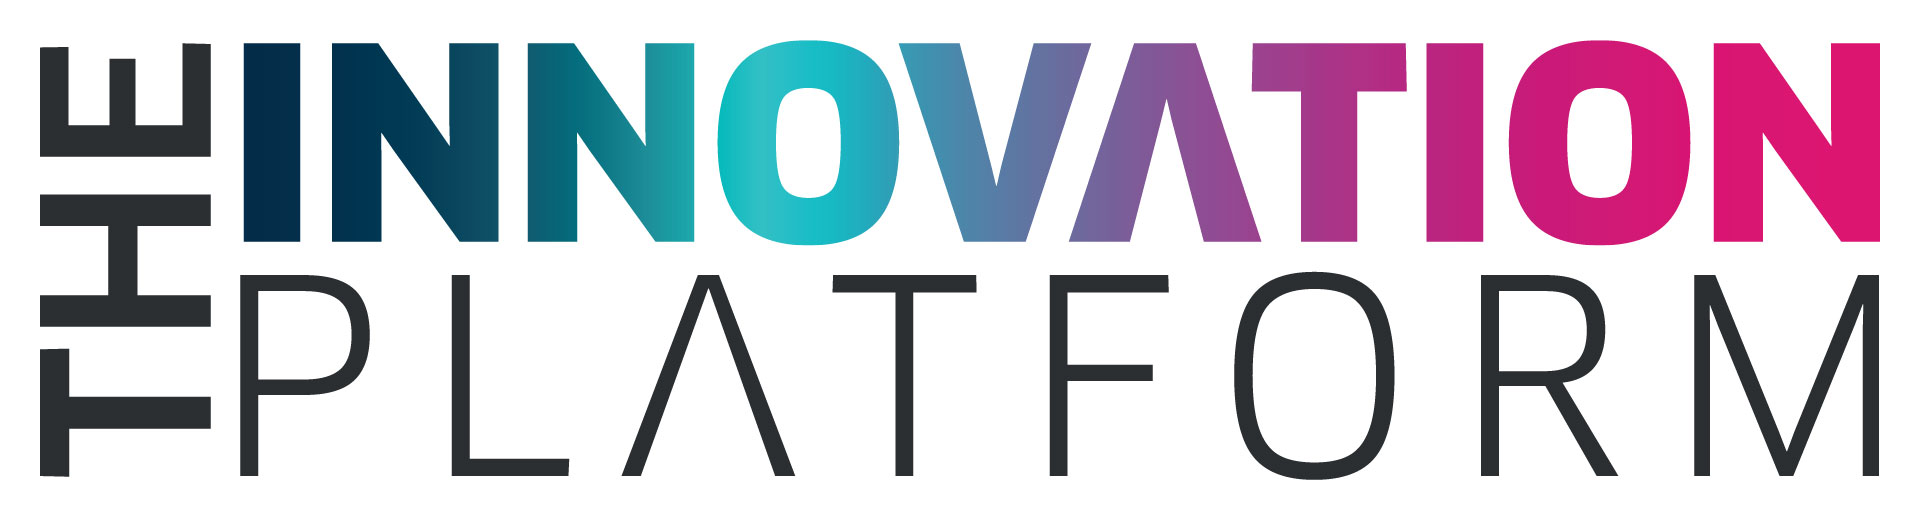 the innovation platform logo main 001